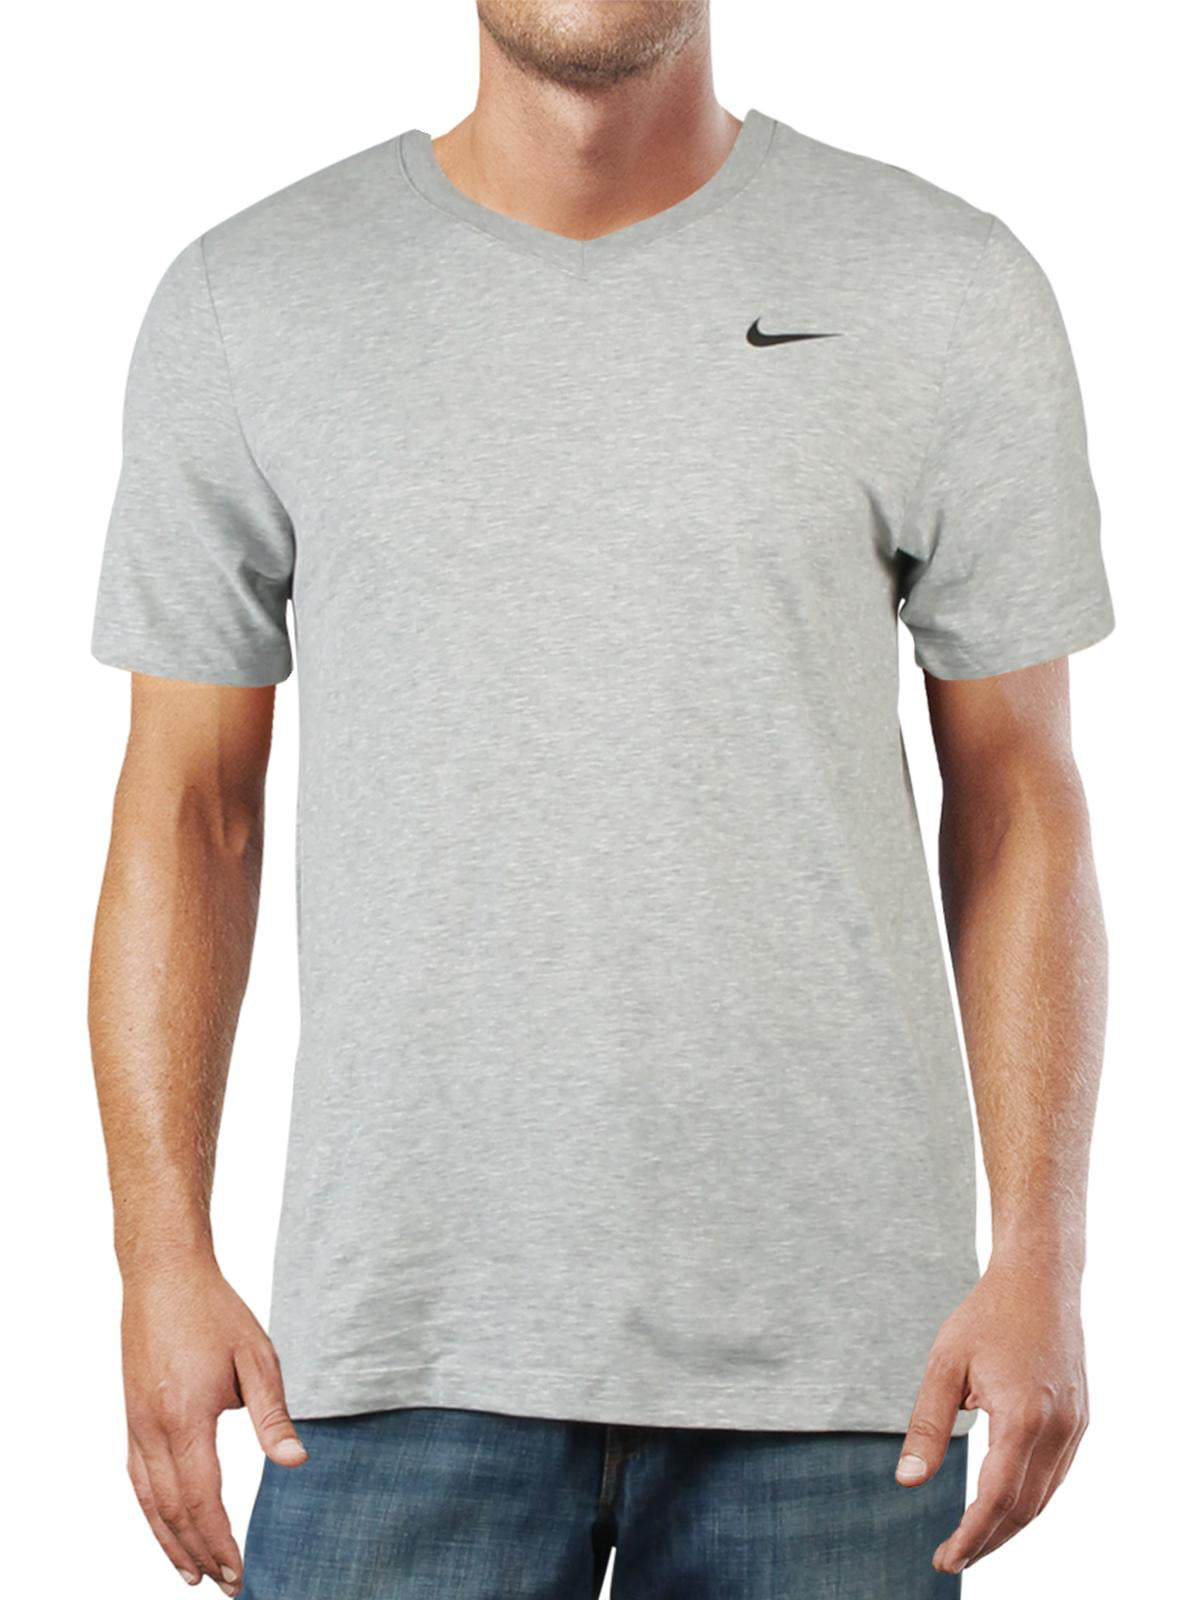 Nike - Nike Mens Training Workout T-Shirt - Walmart.com - Walmart.com